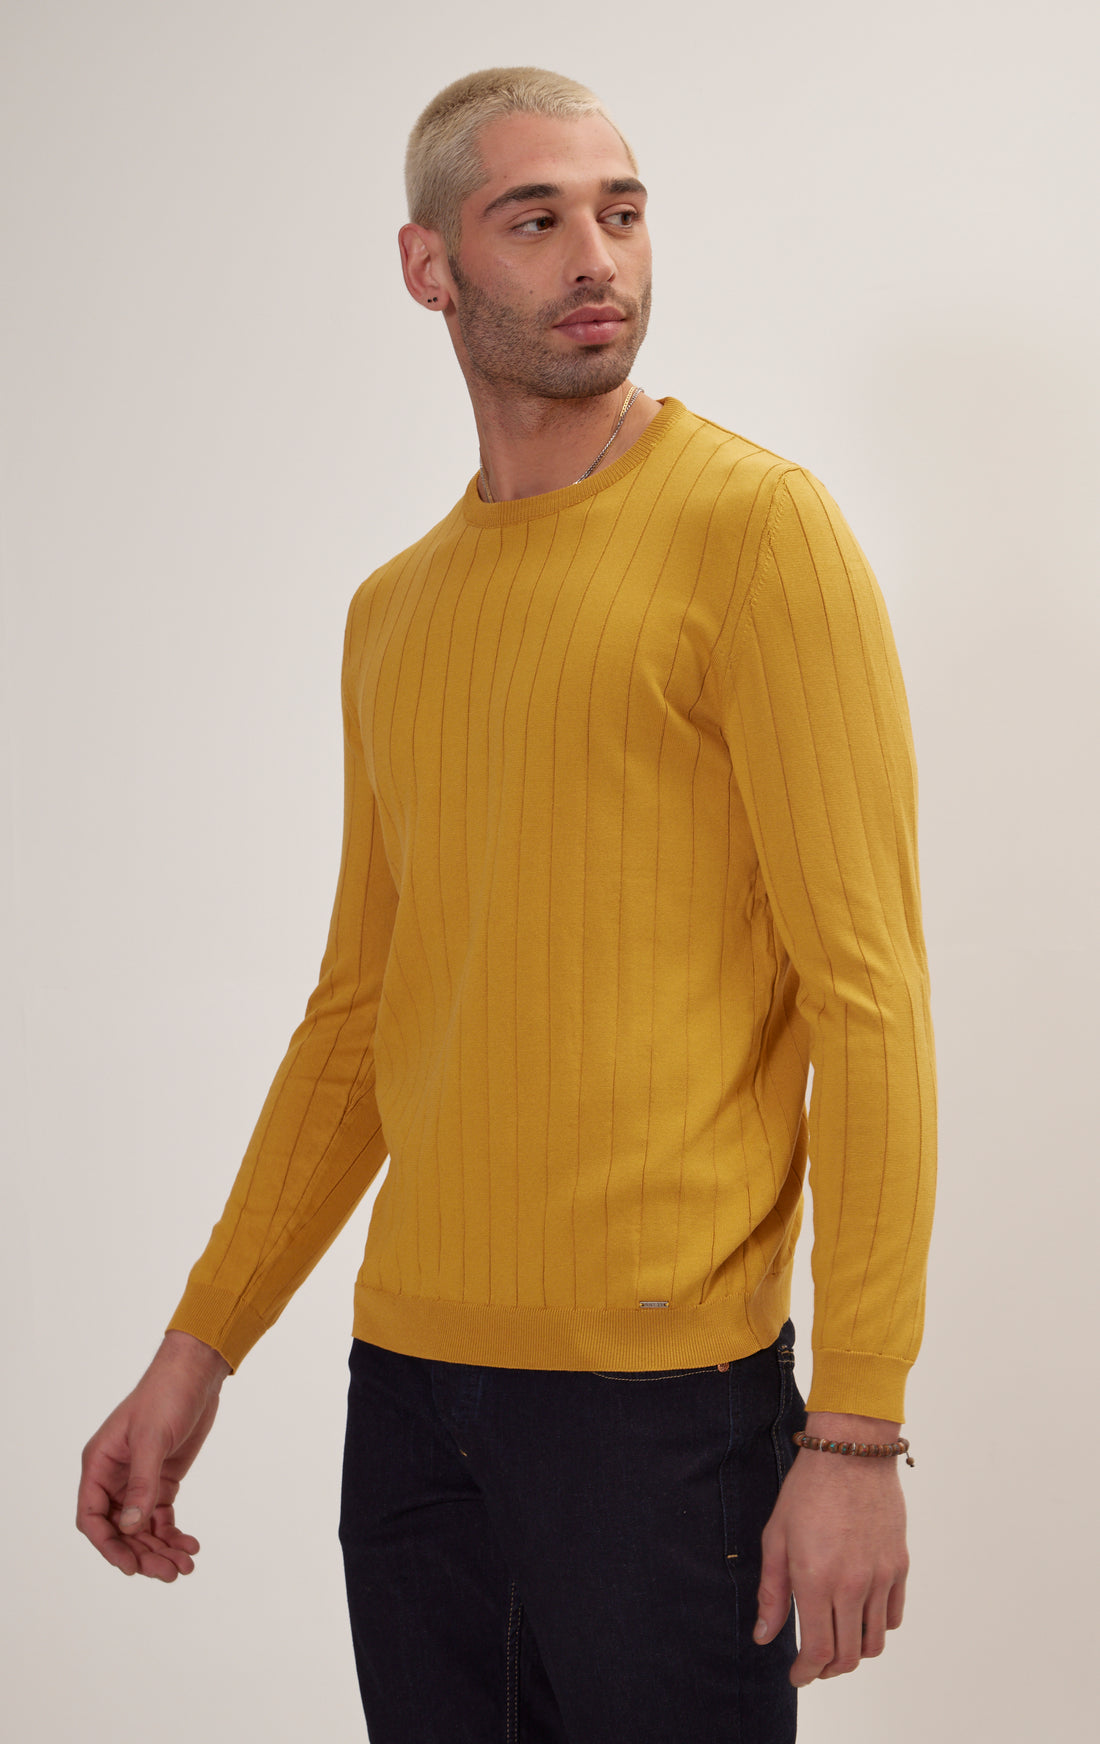 Slip-Stitch Crew Neck Long Sleeve Sweater - Mustard